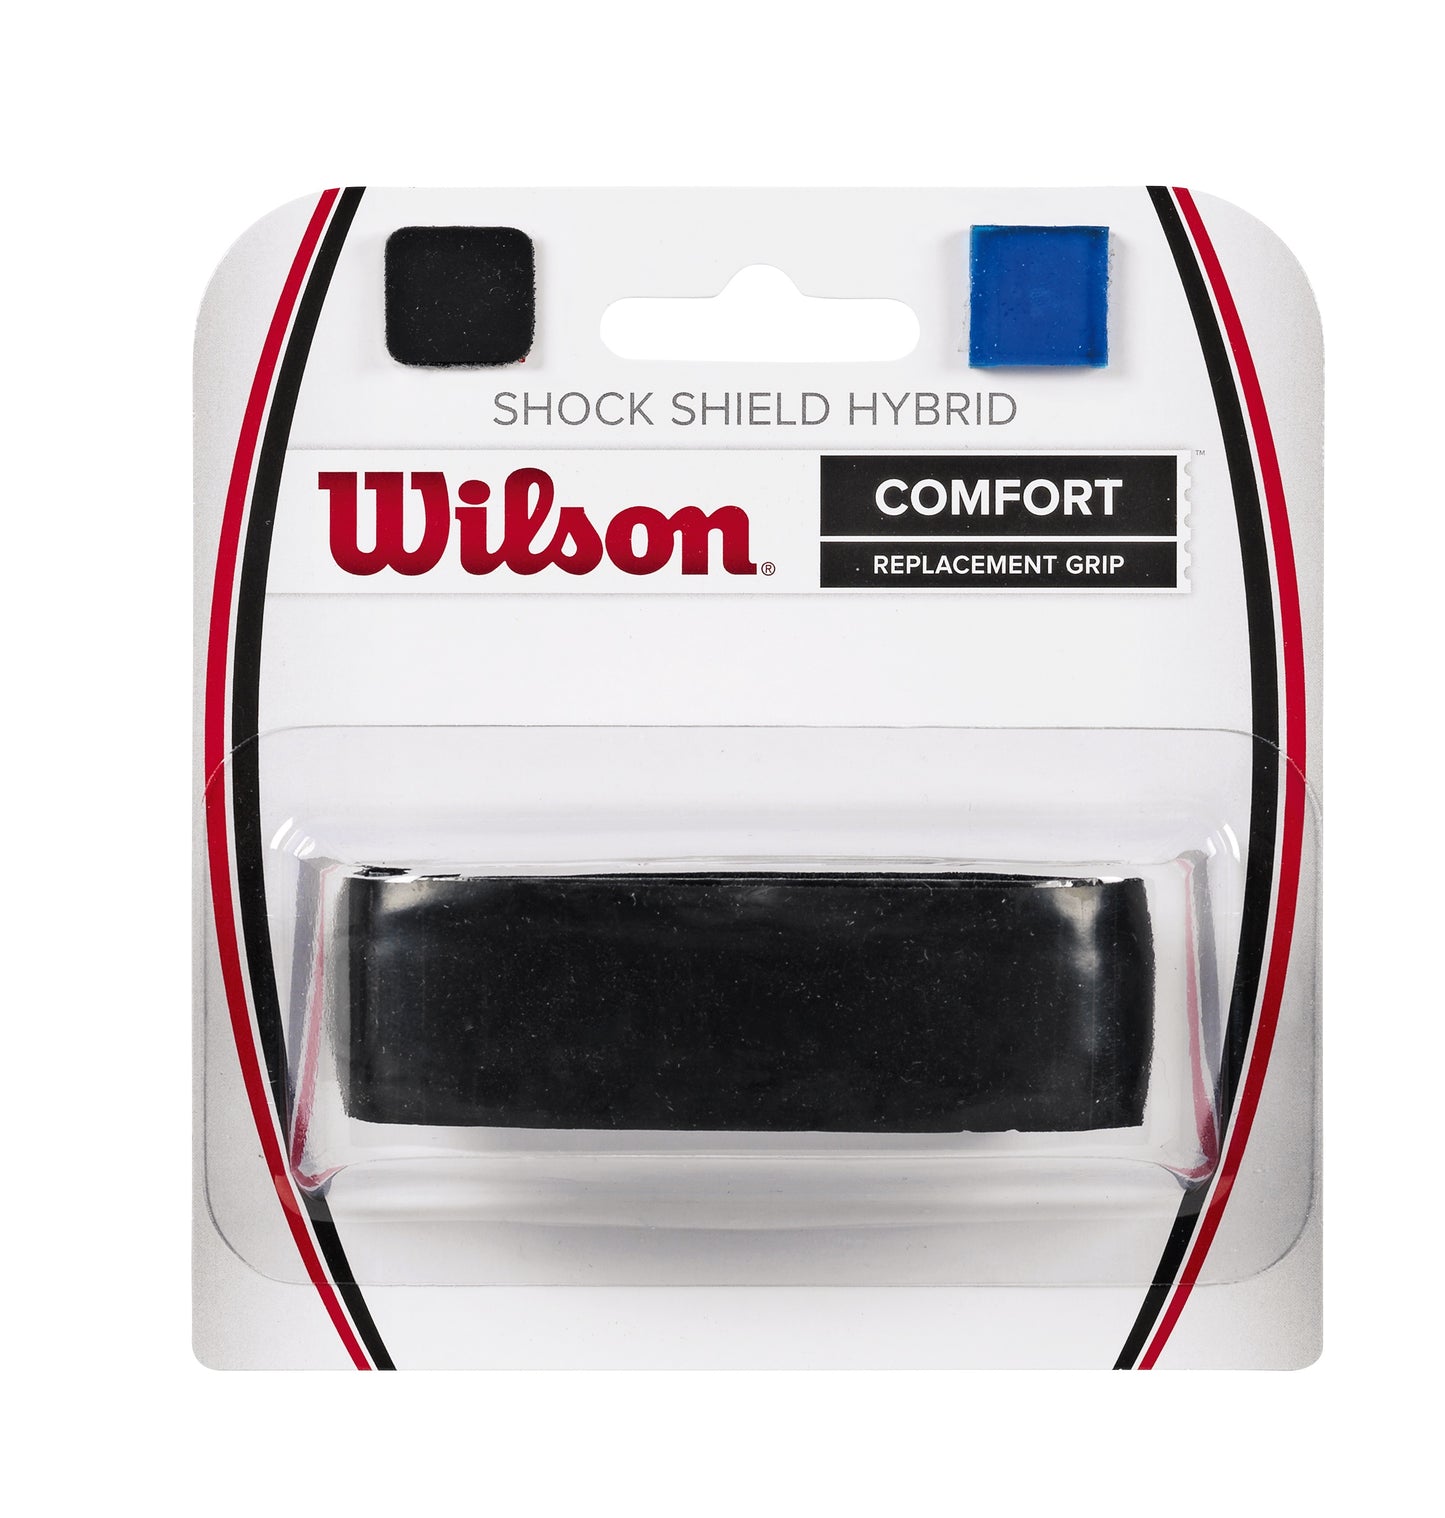 Wilson Shock Shield hybrid tennis replacement grip - VuTennis